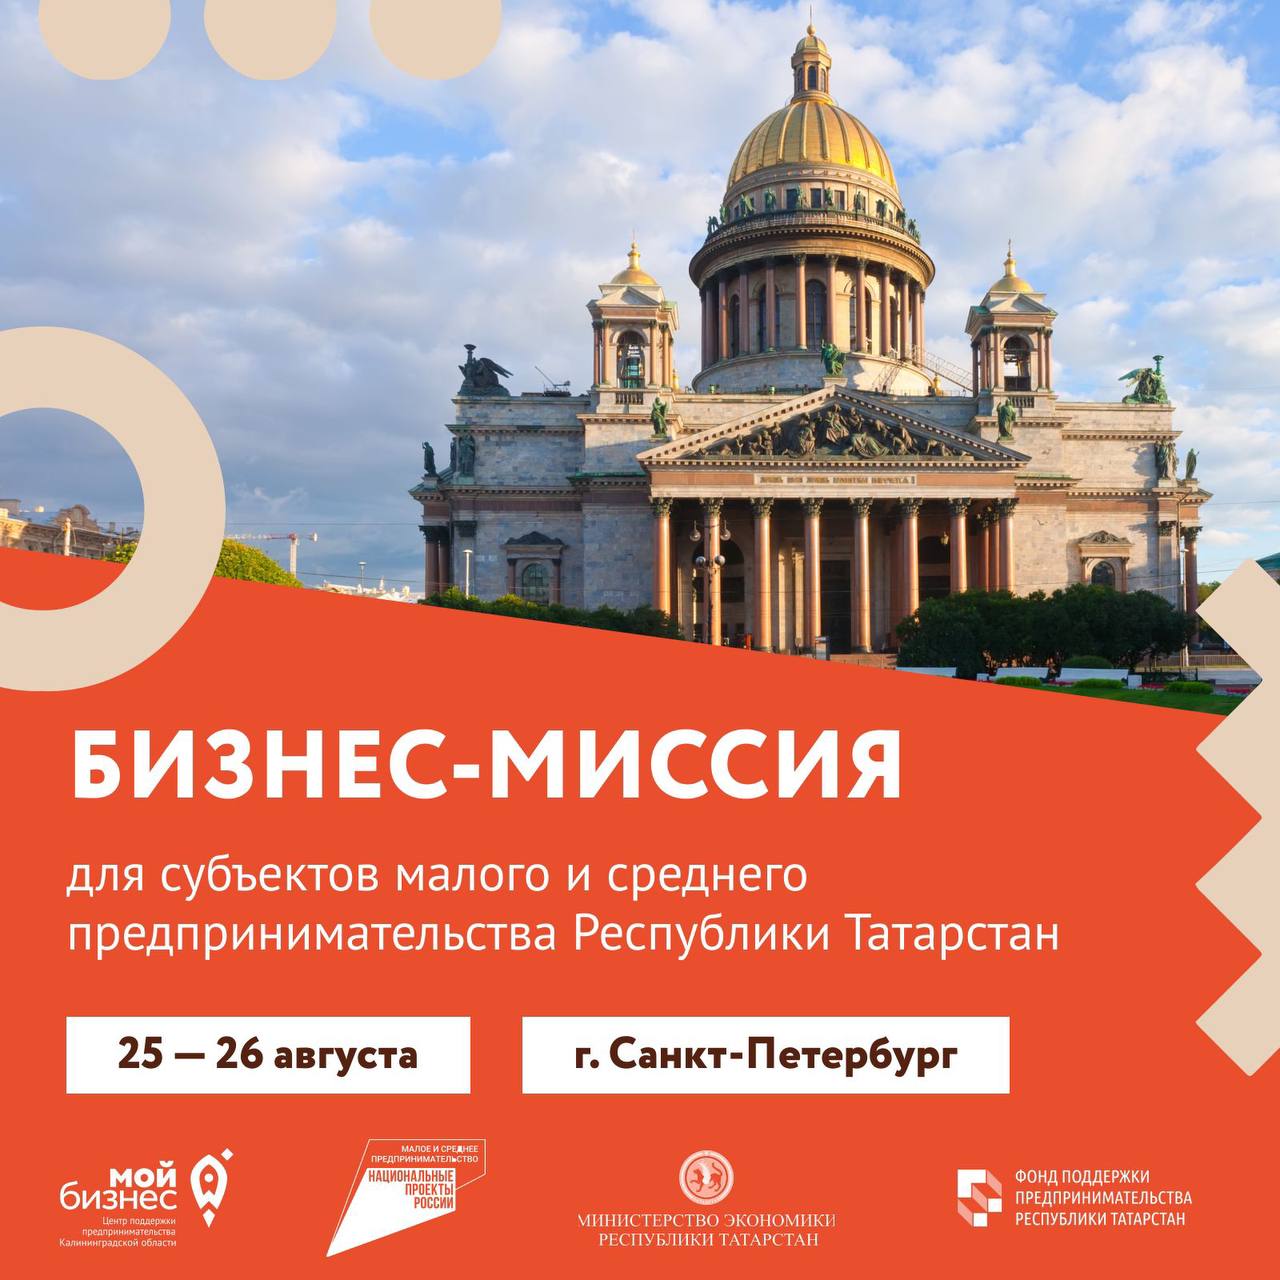 Бизнес-миссия из Татарстана в Санкт-Петербург при поддержке Центра «Мой бизнес».